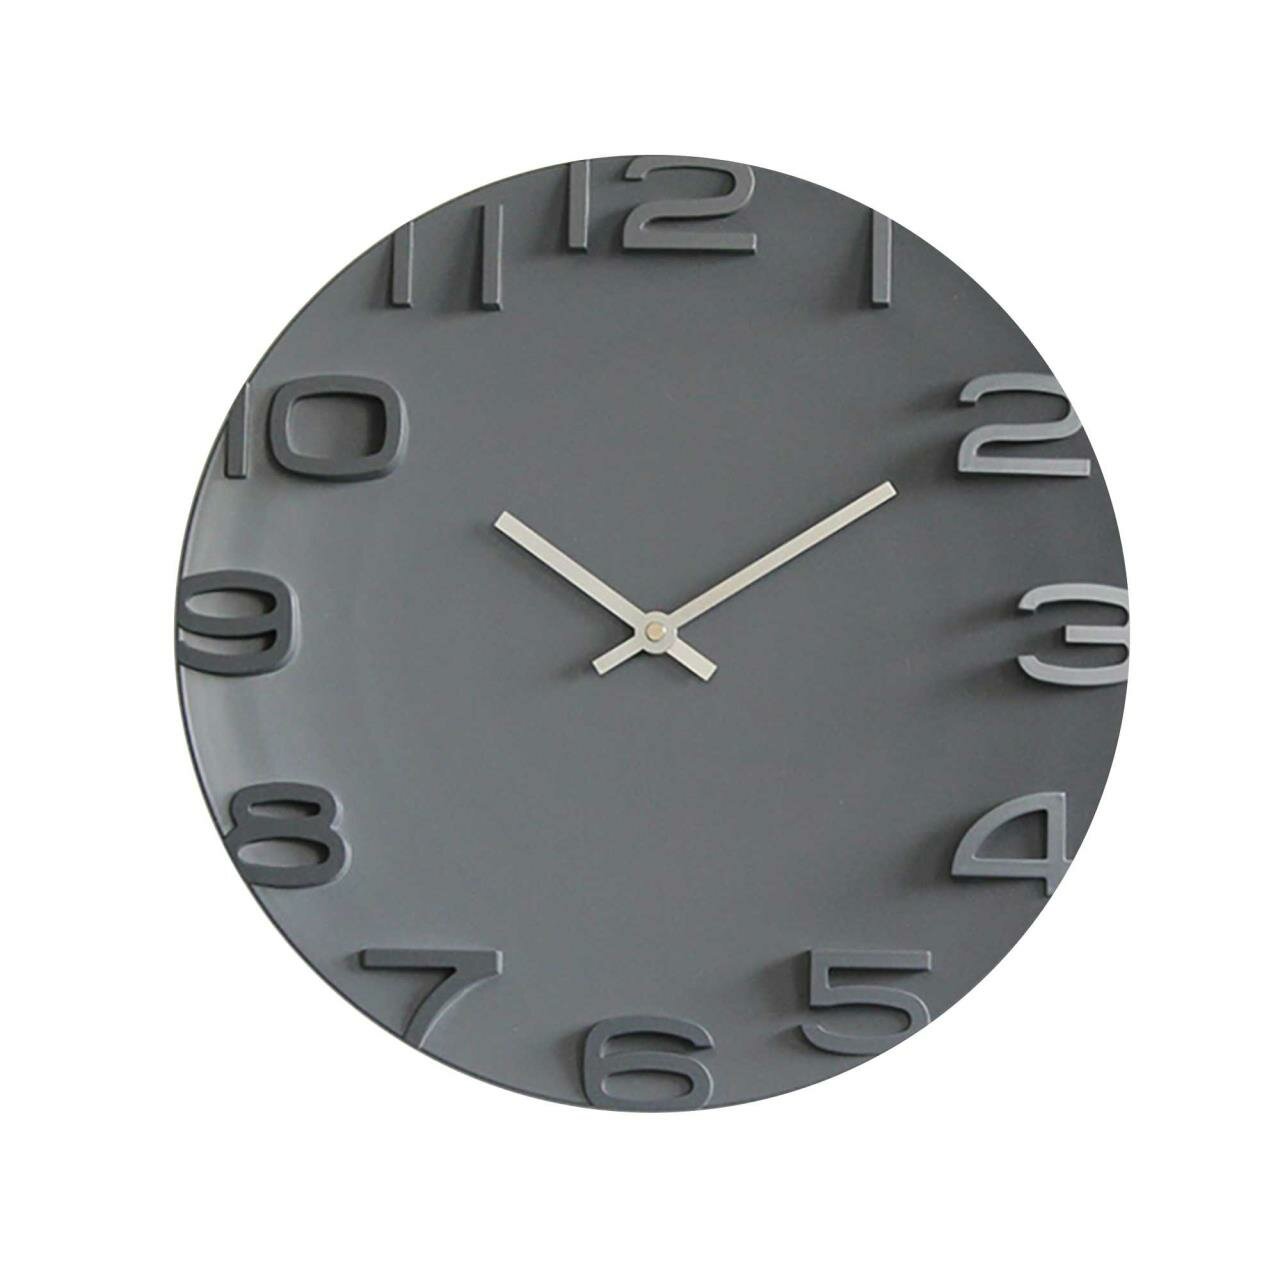 PL200925 Часы настенные, круглые, цвет корпуса серый, пластик, Ø35см, источник питания 1 батарейка А